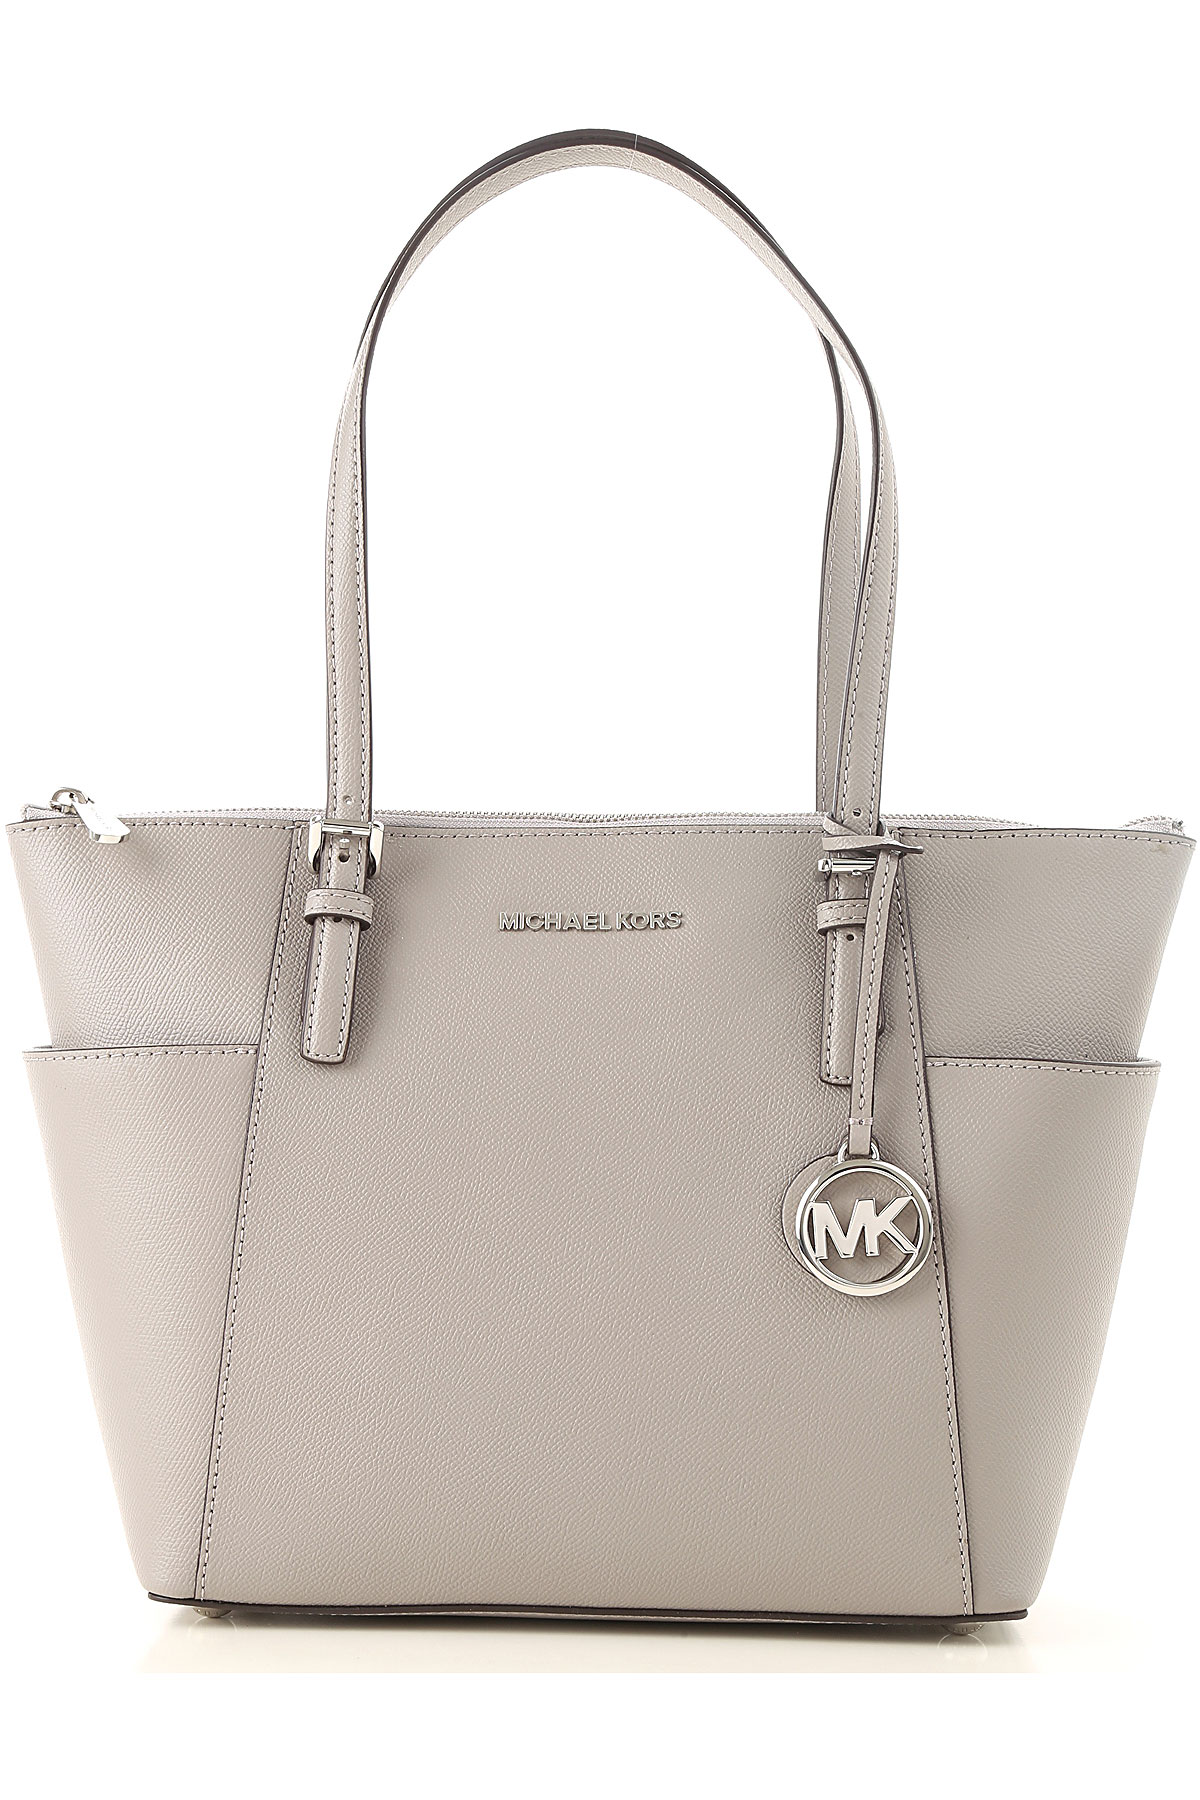 Handbags Michael Kors, Style code: 30f2sttt8l-081-